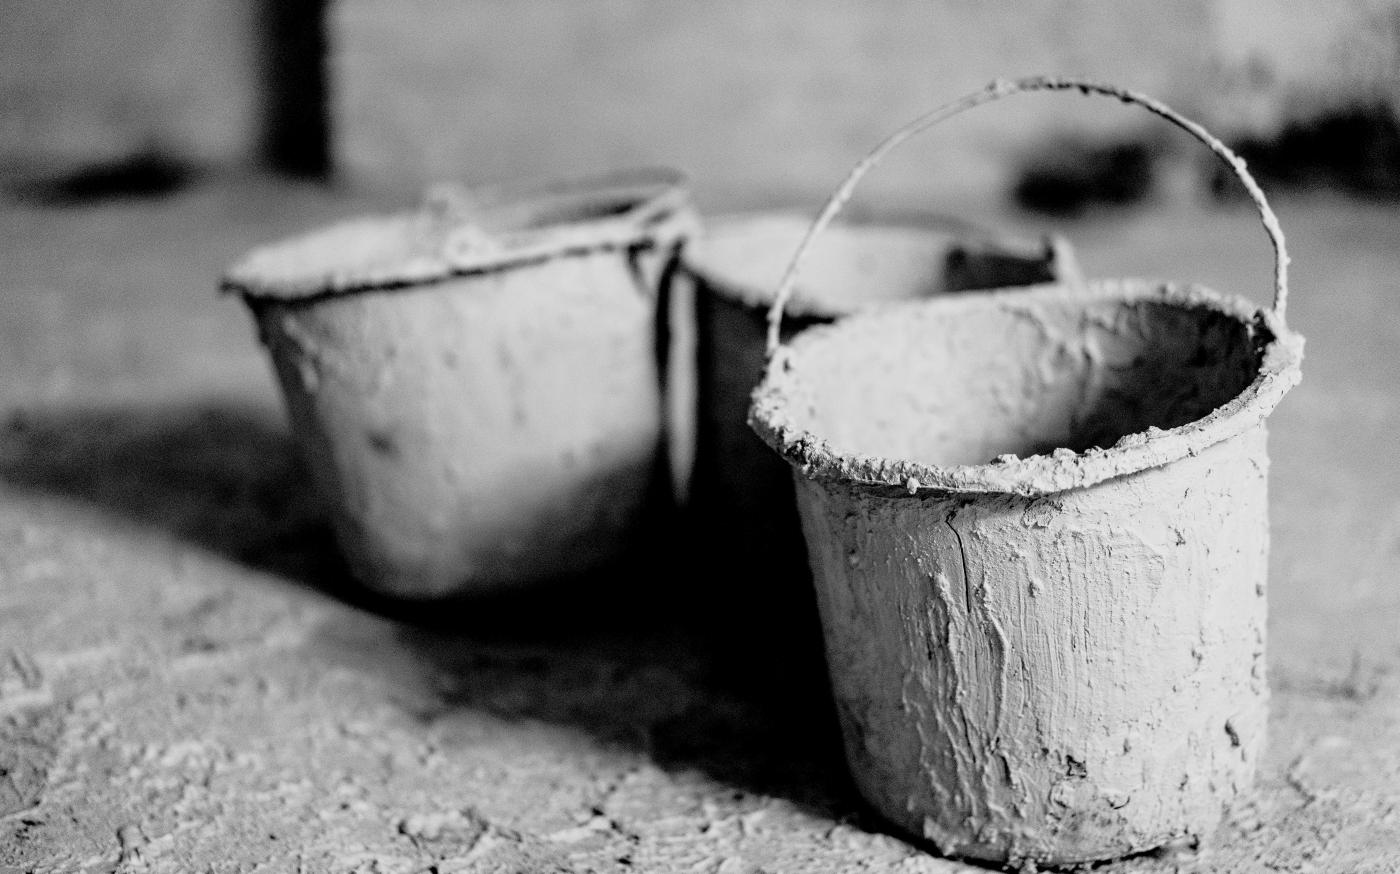 three gray buckets by Nils Schirmer courtesy of Unsplash.